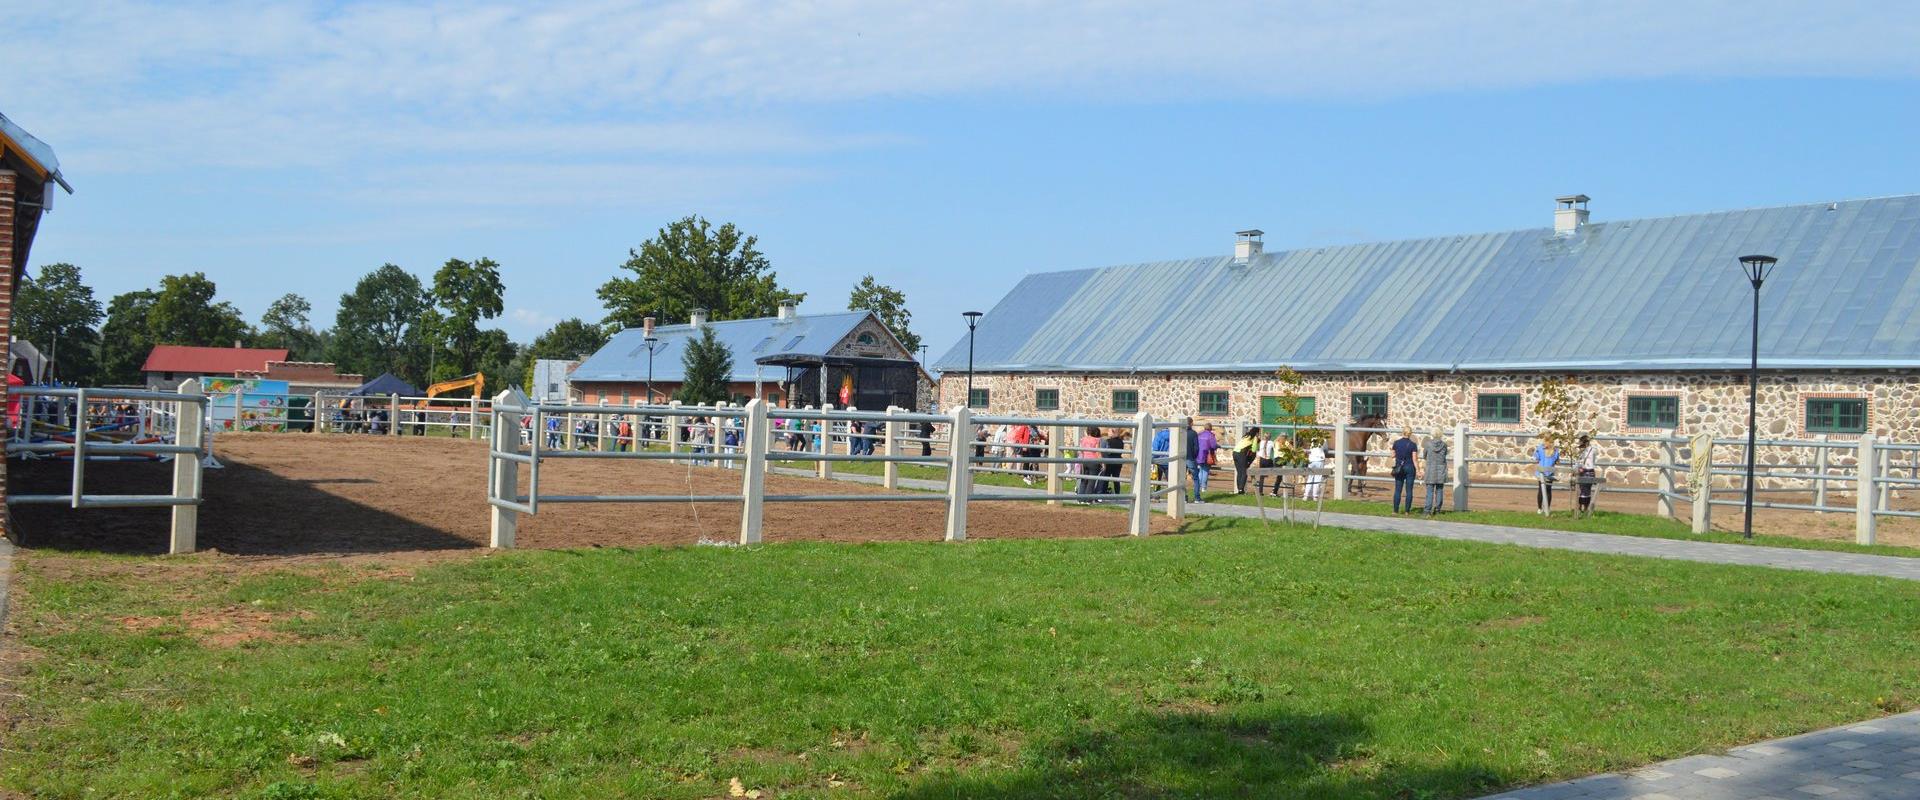 Tori Horse Breeding Farm Museum